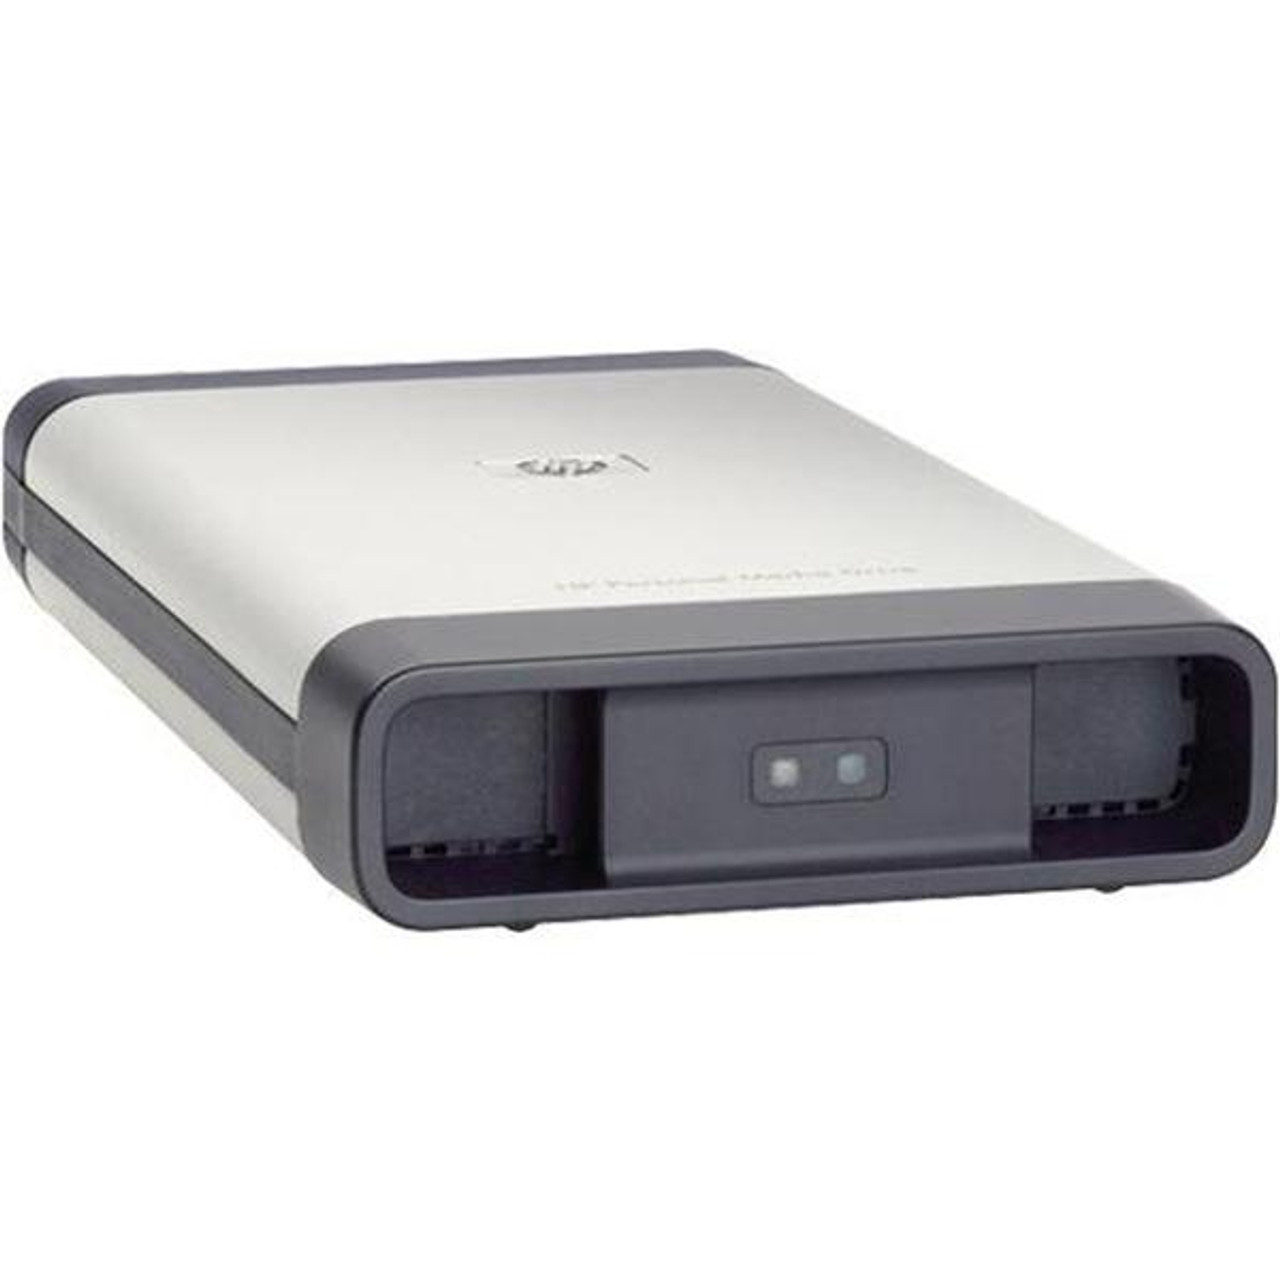 Portable Media Storage XP10000